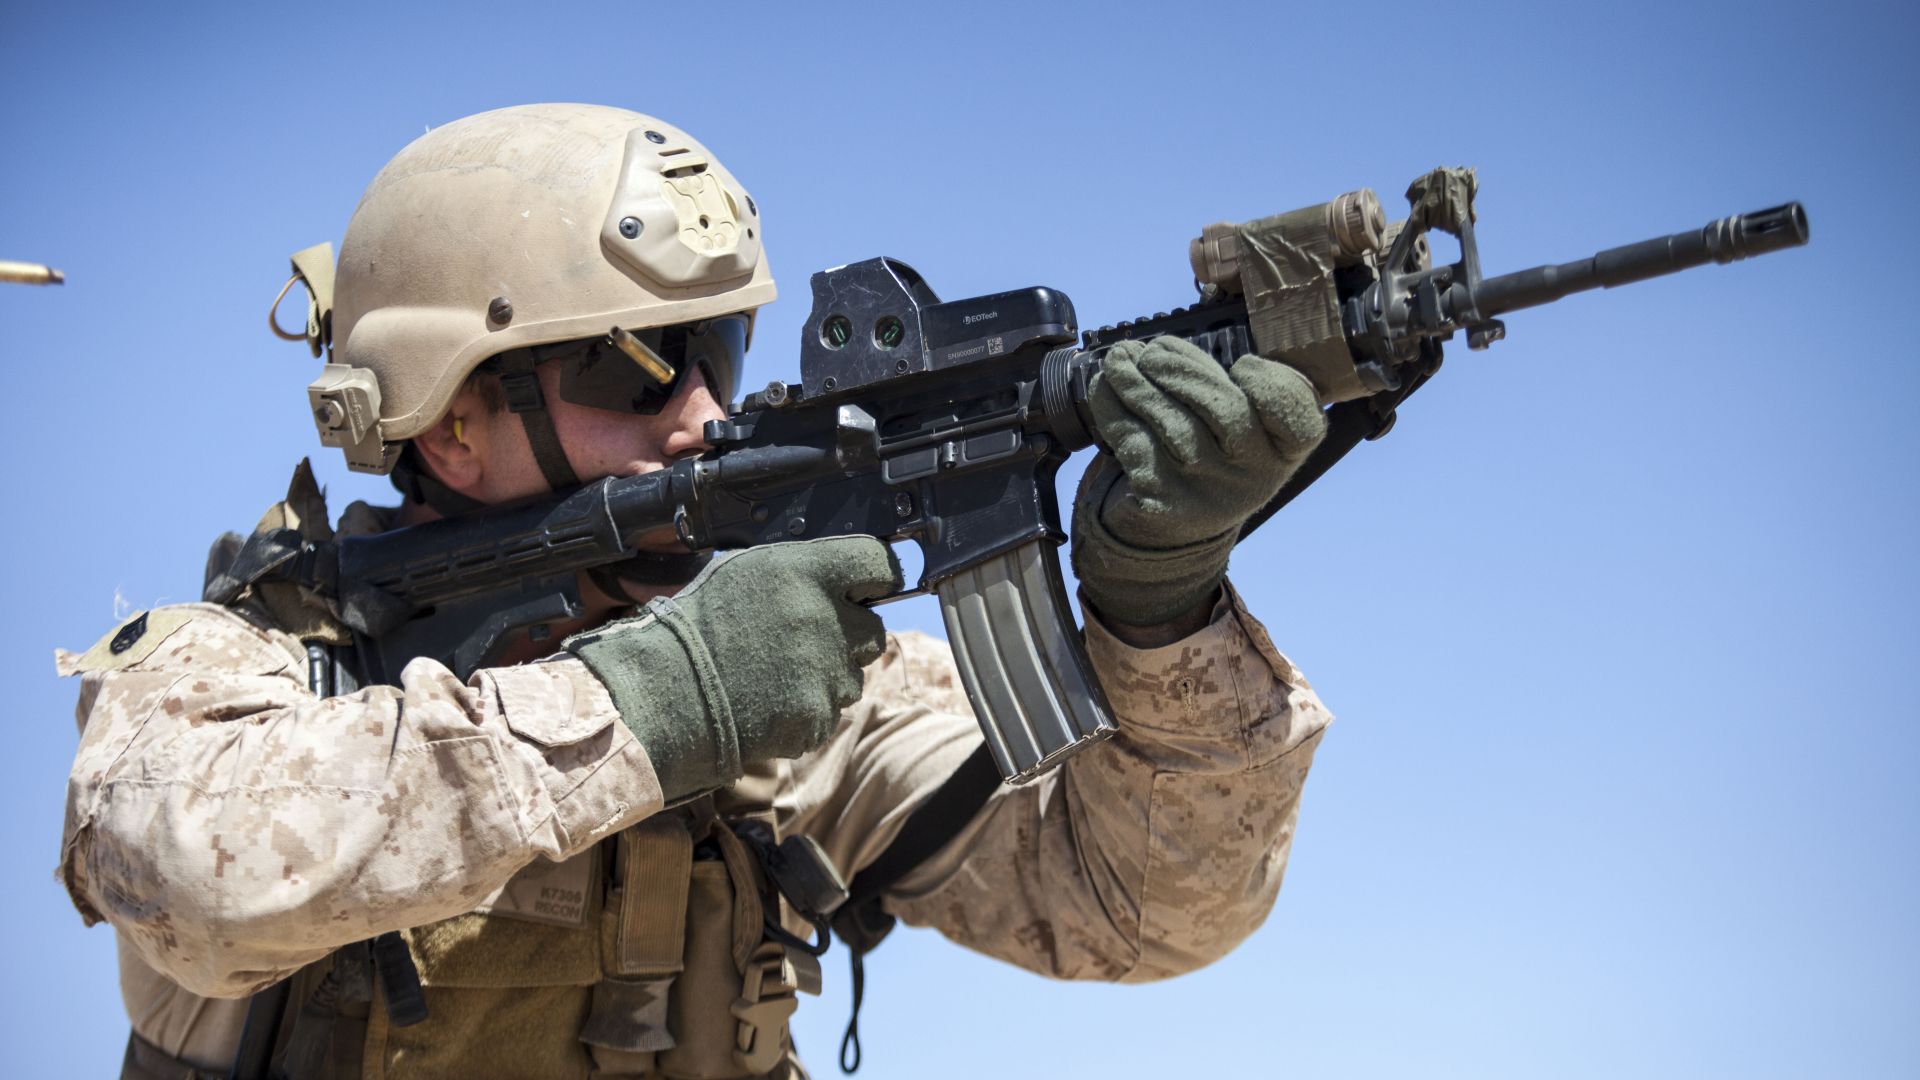 Армия США, AR-15, M-16, red sight, U.S. Army, Marine Corps (horizontal)